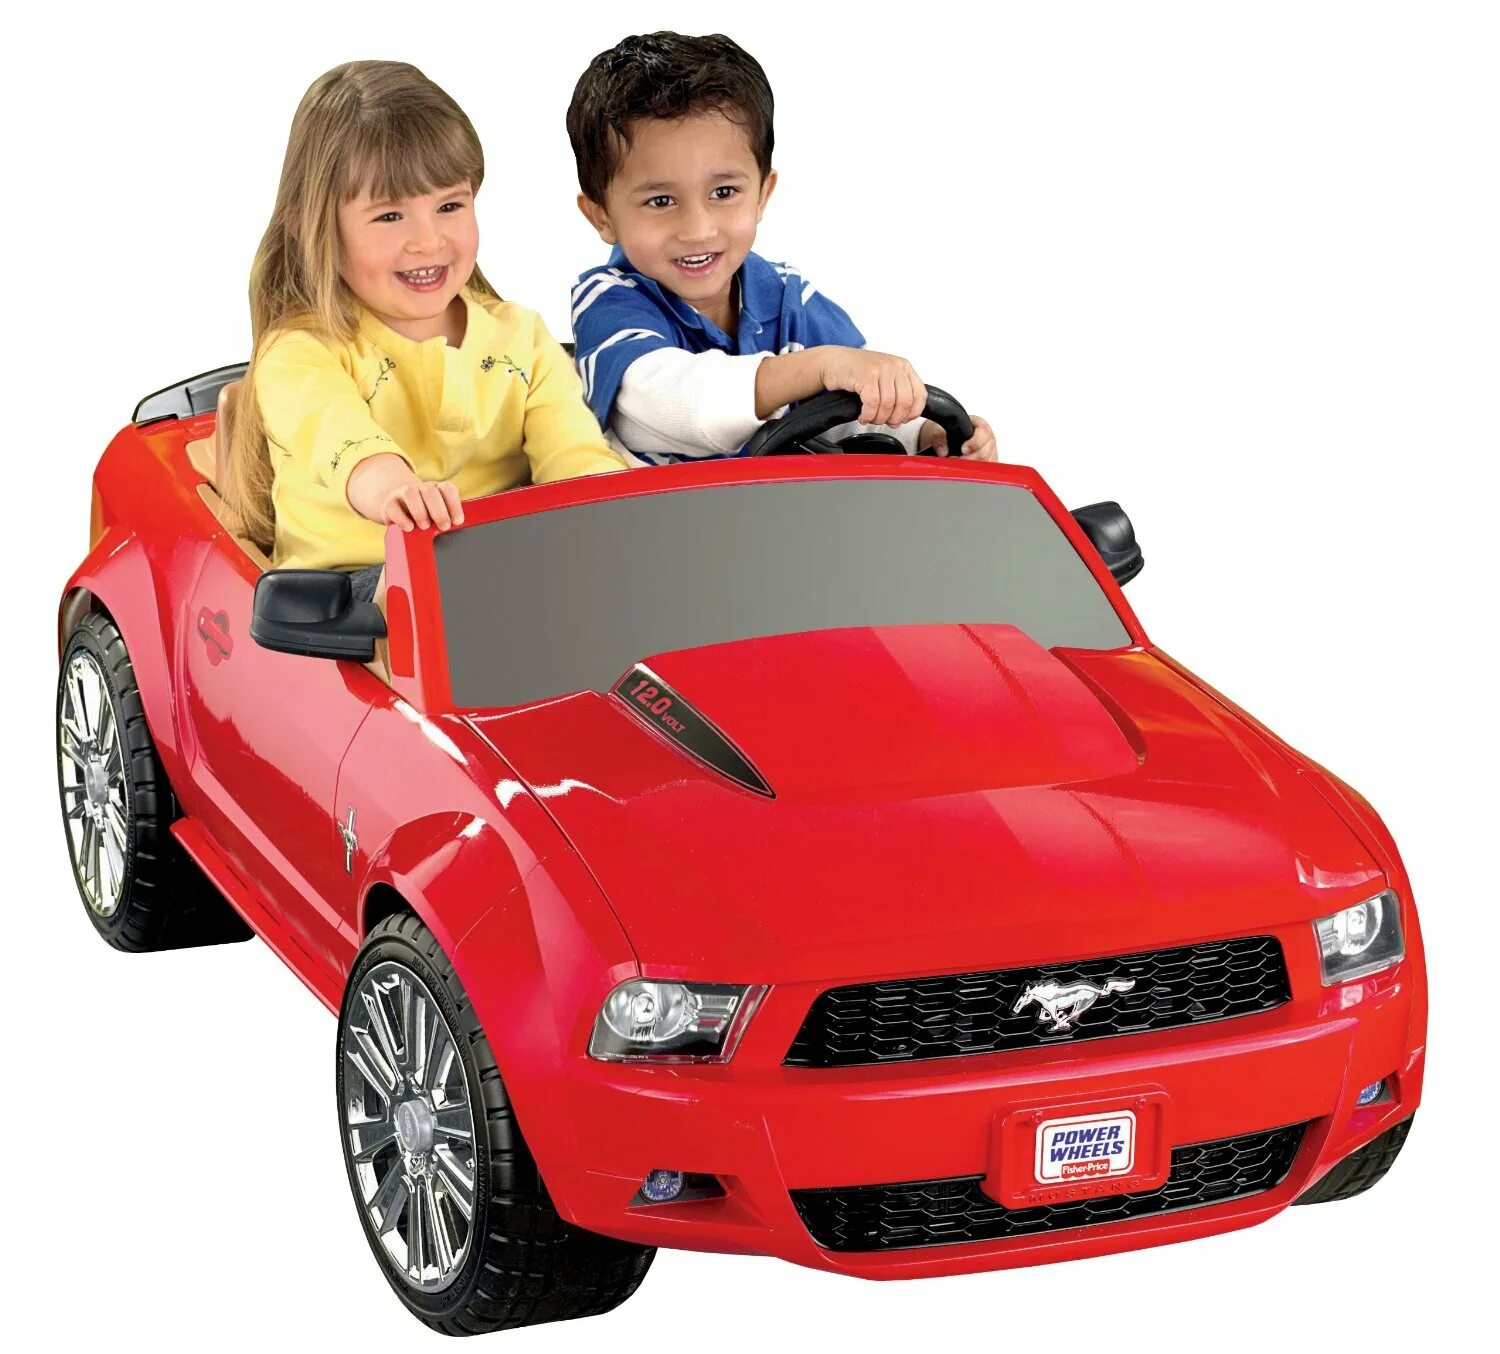 Toys toys машина. Power Wheels Fisher Price Ford Mustang. Электромобиль Ford Fisher Price. Для малышей. Машины. Машина для девтк.